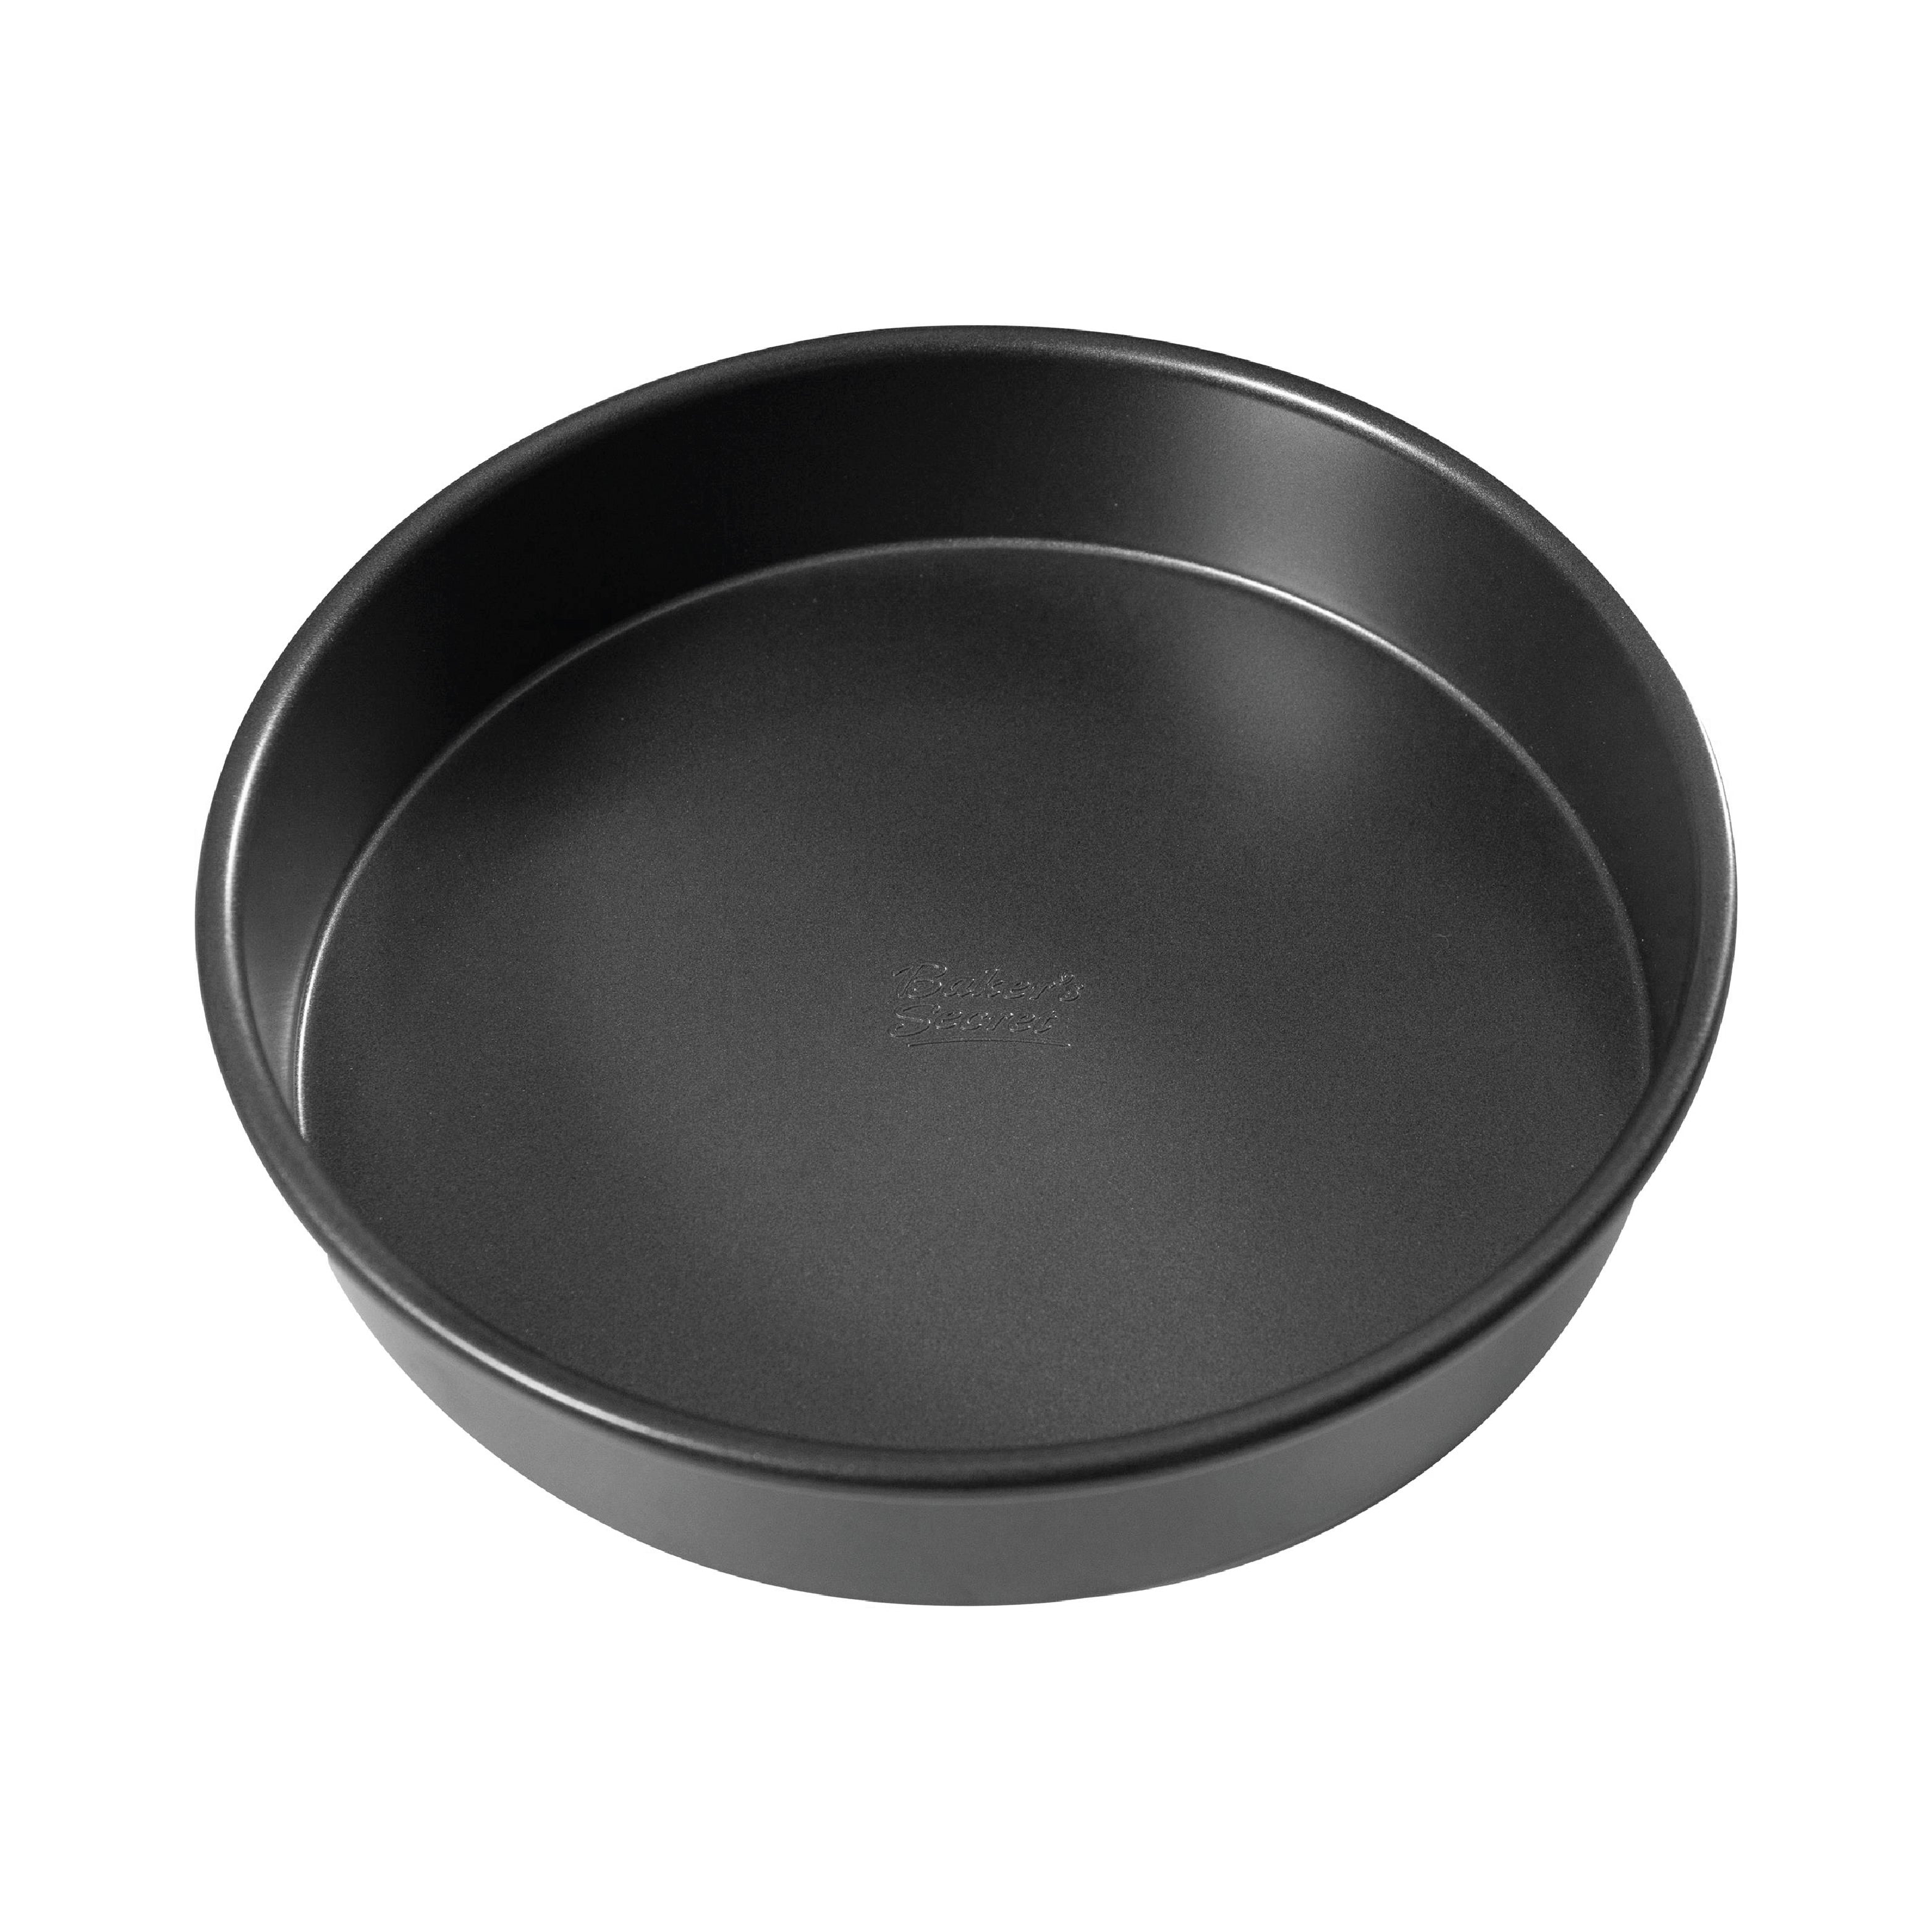 Usa Pans, Round Cake Pan, 9 1/2 outer diameter, New